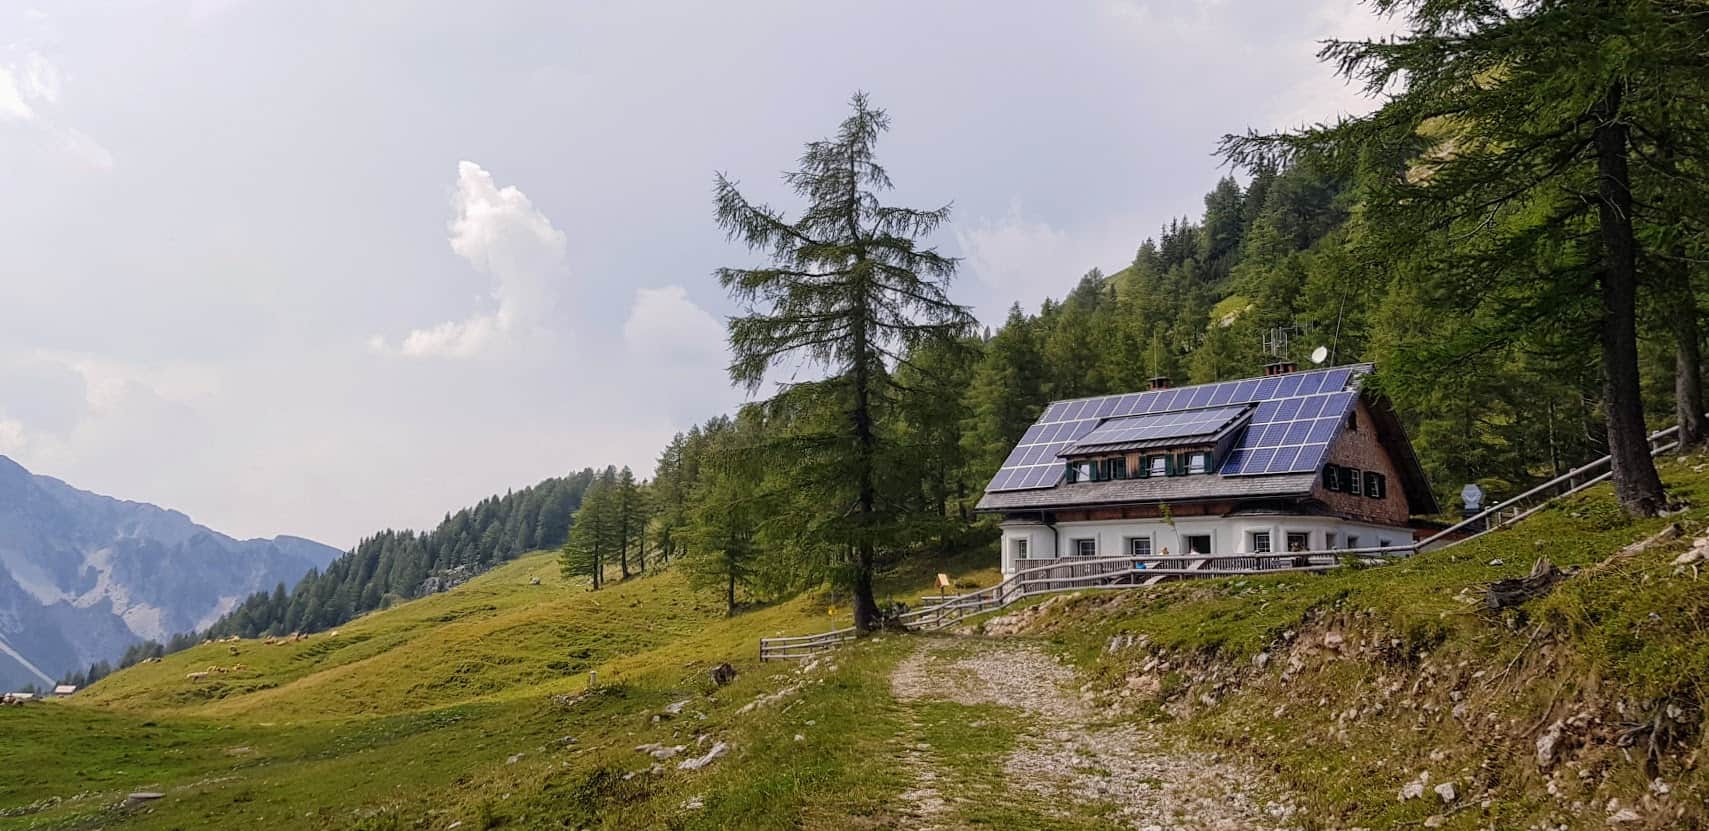 Klagenfurter Hütte im Bärental, Karawankenregion Rosental in Kärnten, Österreich